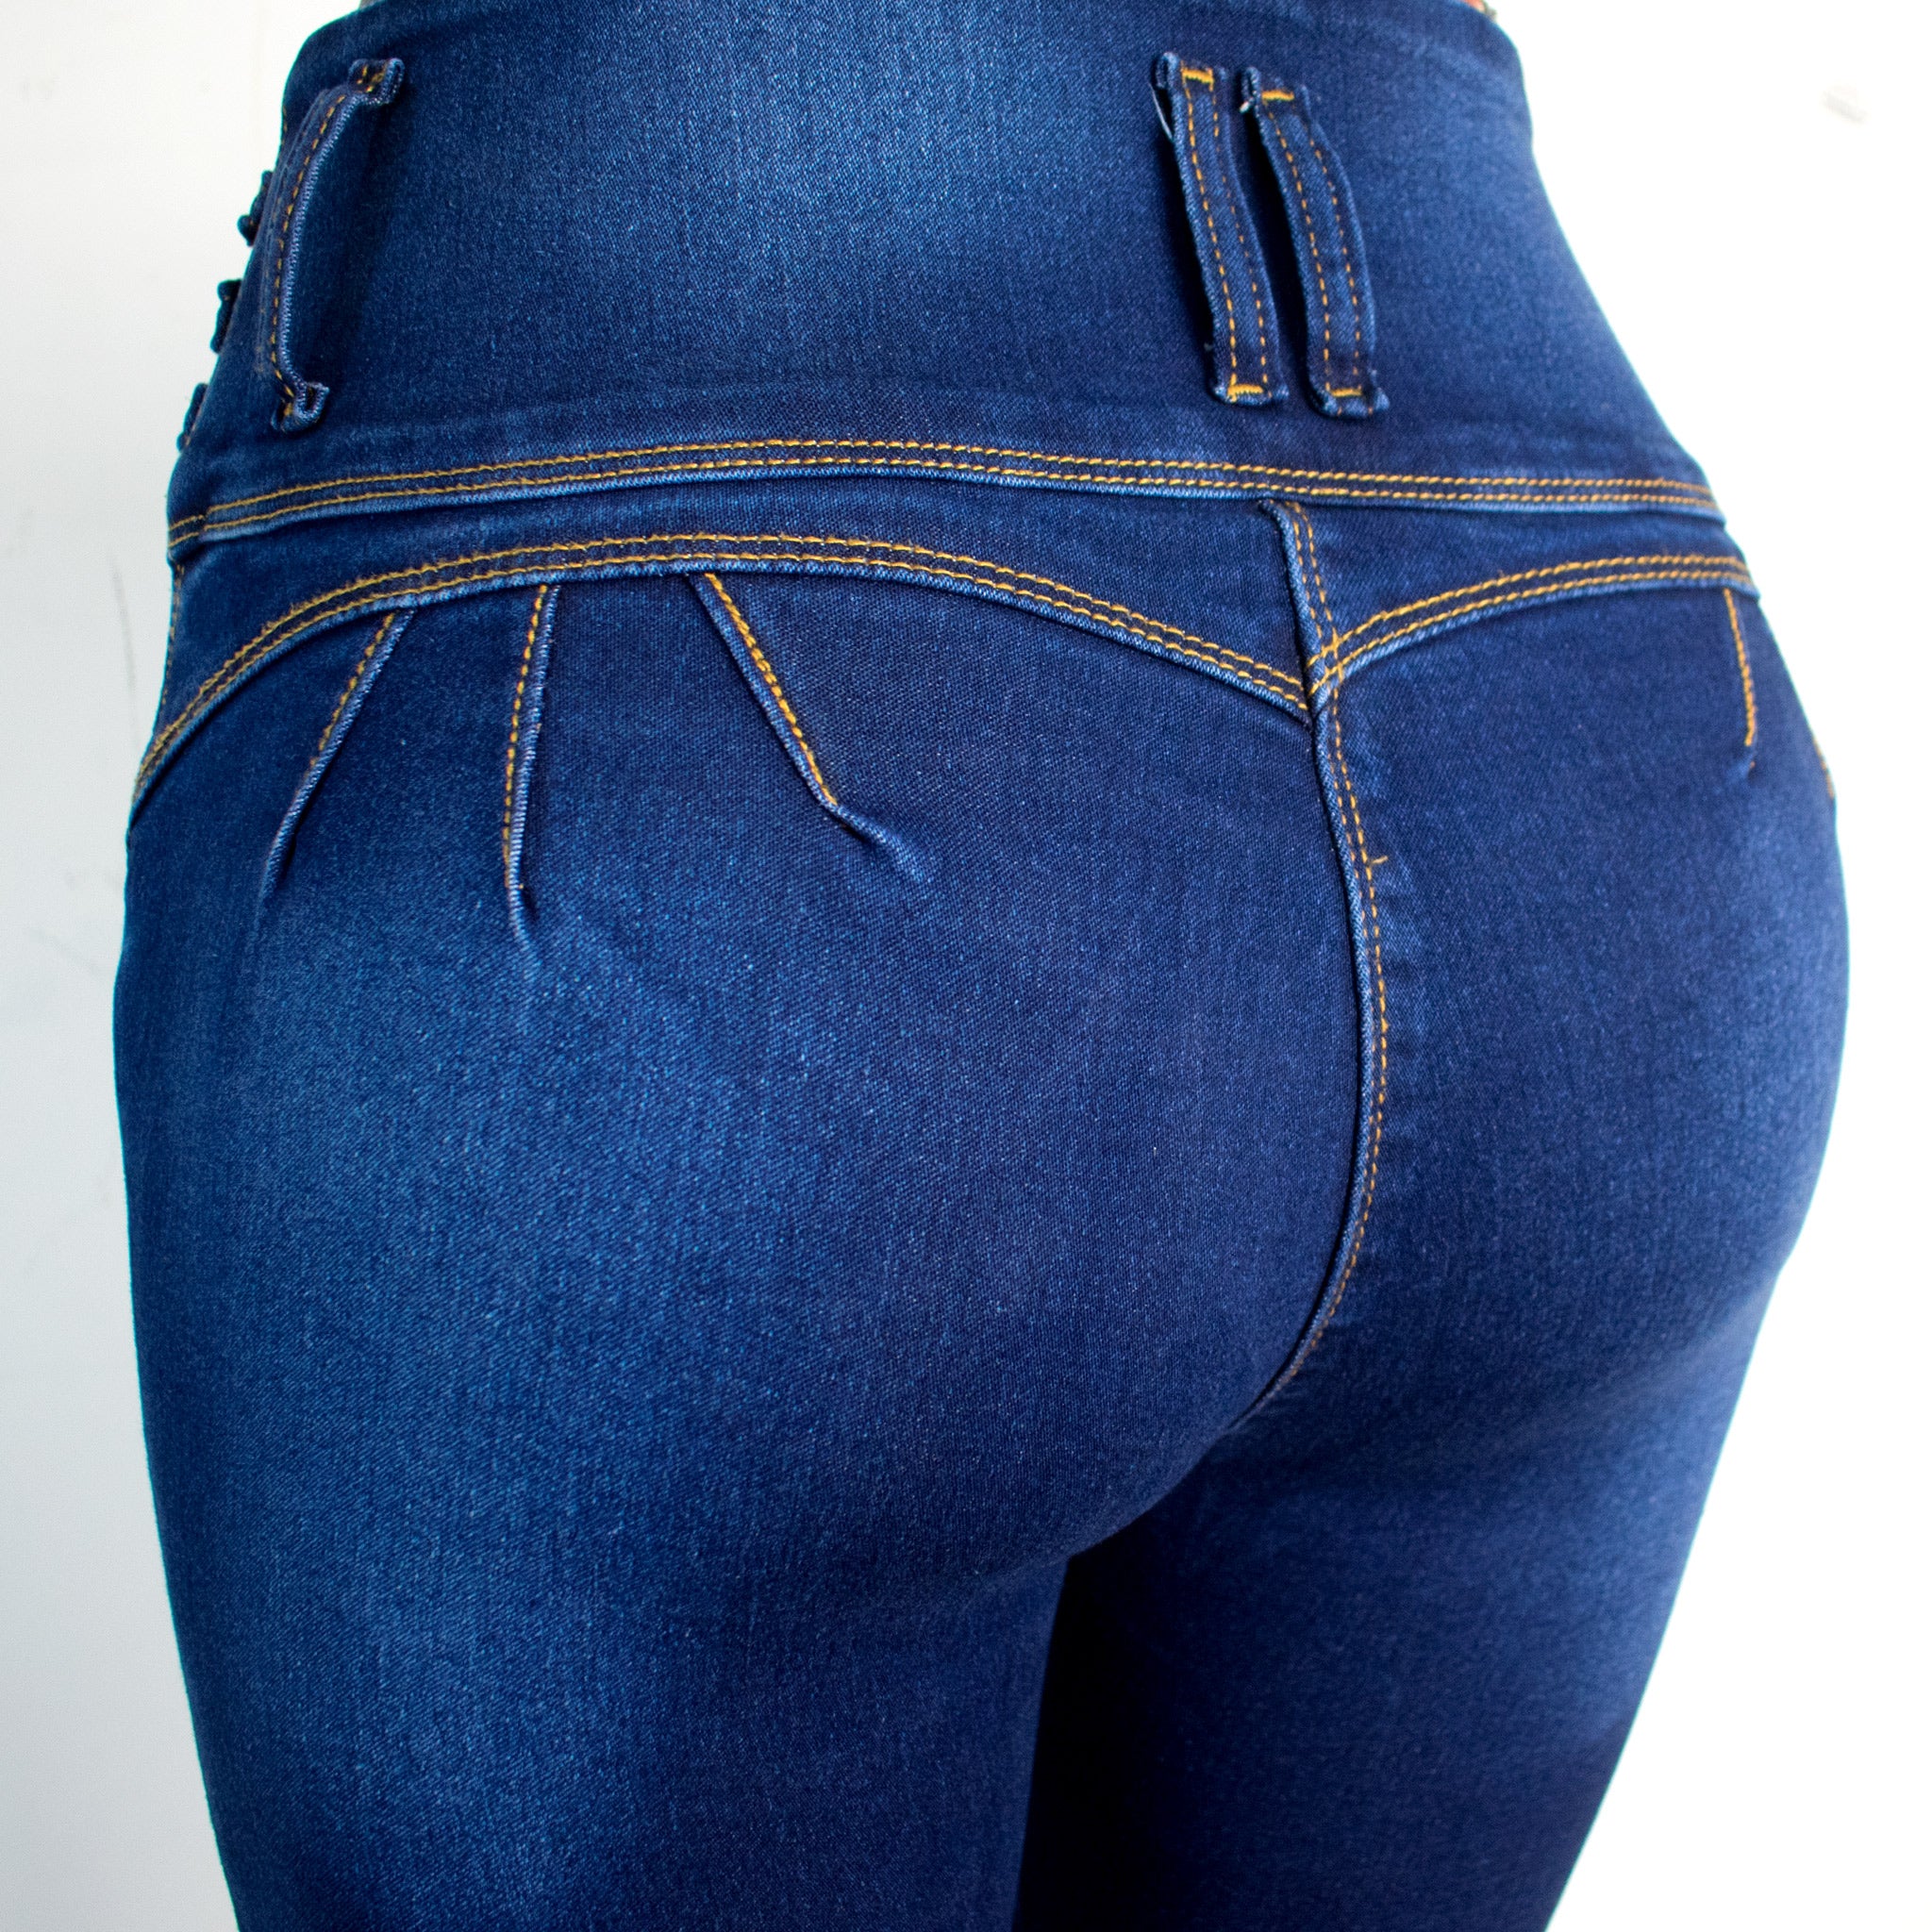 Jean para Mujer en Pretina alta/ PUSH UP - Color: Azul Indigo (Curves Style Collection)